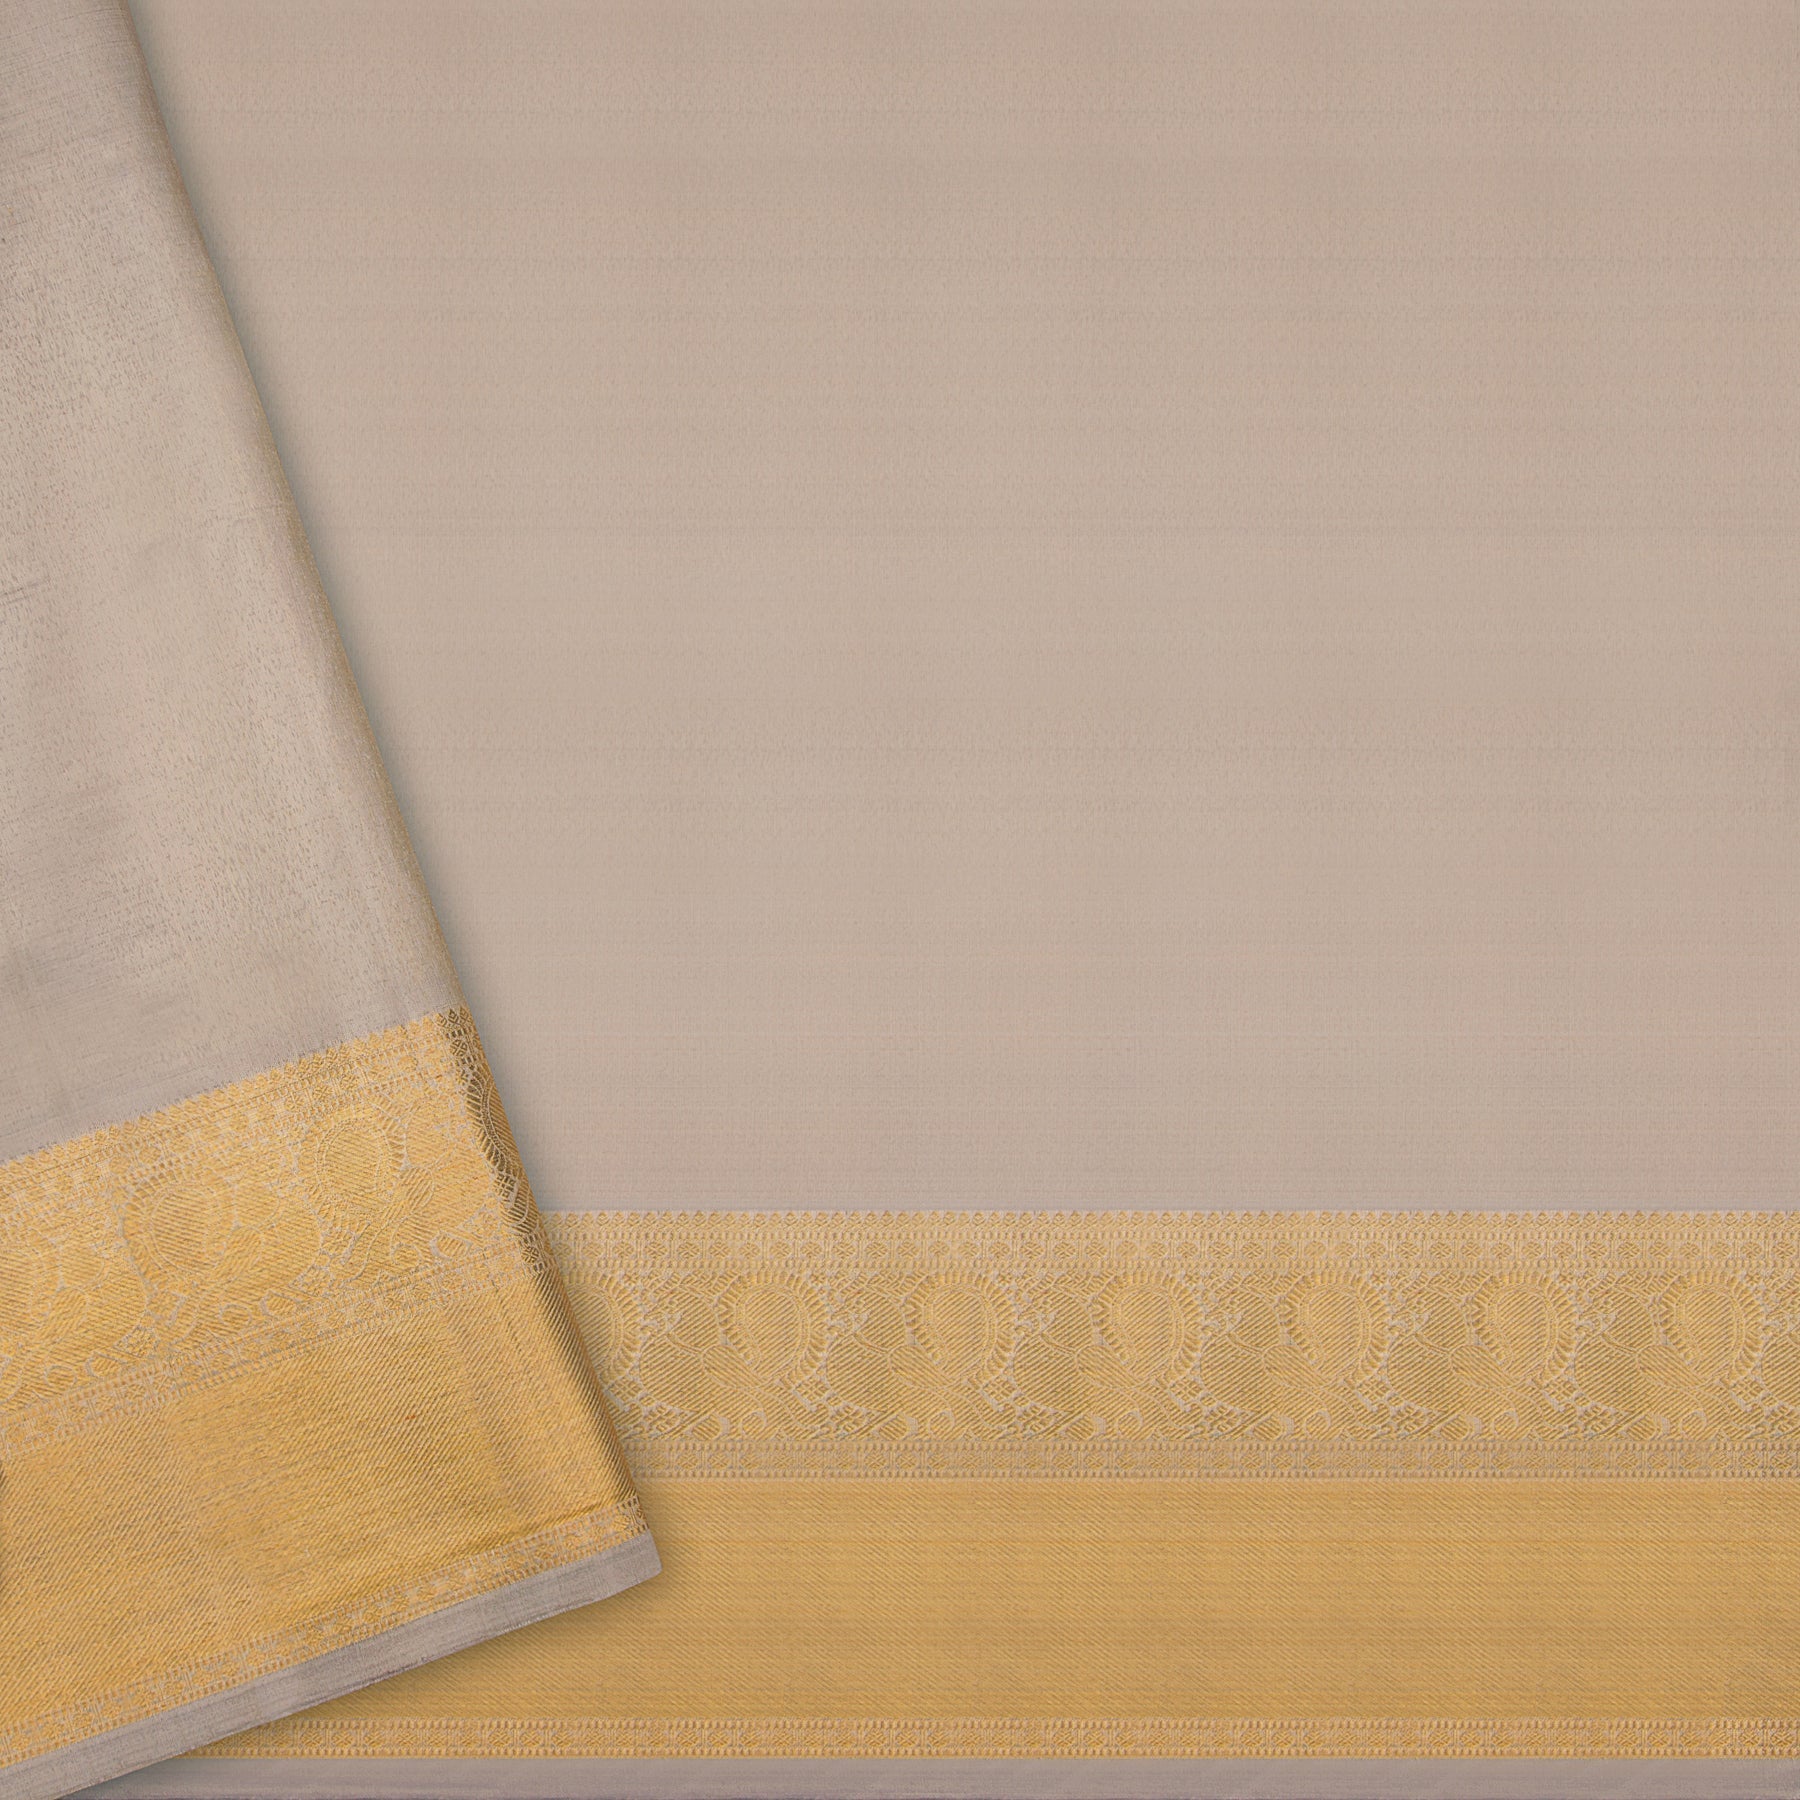 Kanakavalli Kanjivaram Silk Sari 23-110-HS001-02144 - Blouse View